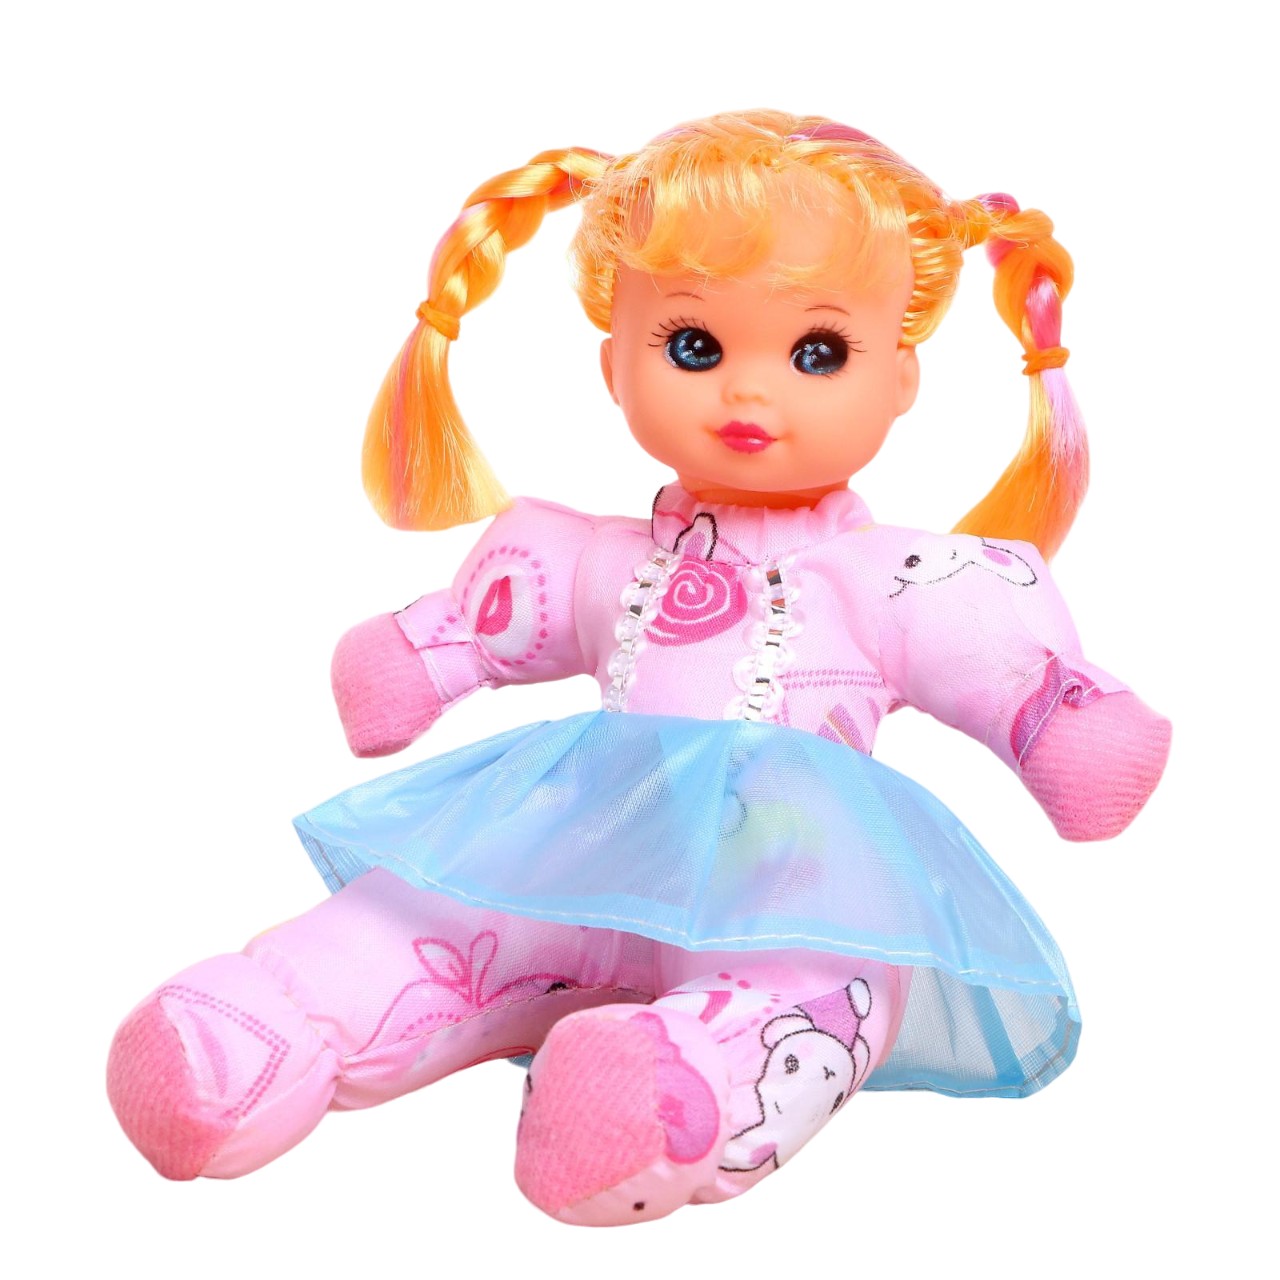 Кукла Маша» со звуком, МИКС кукла классическая алена со звуком высота 30 см микс